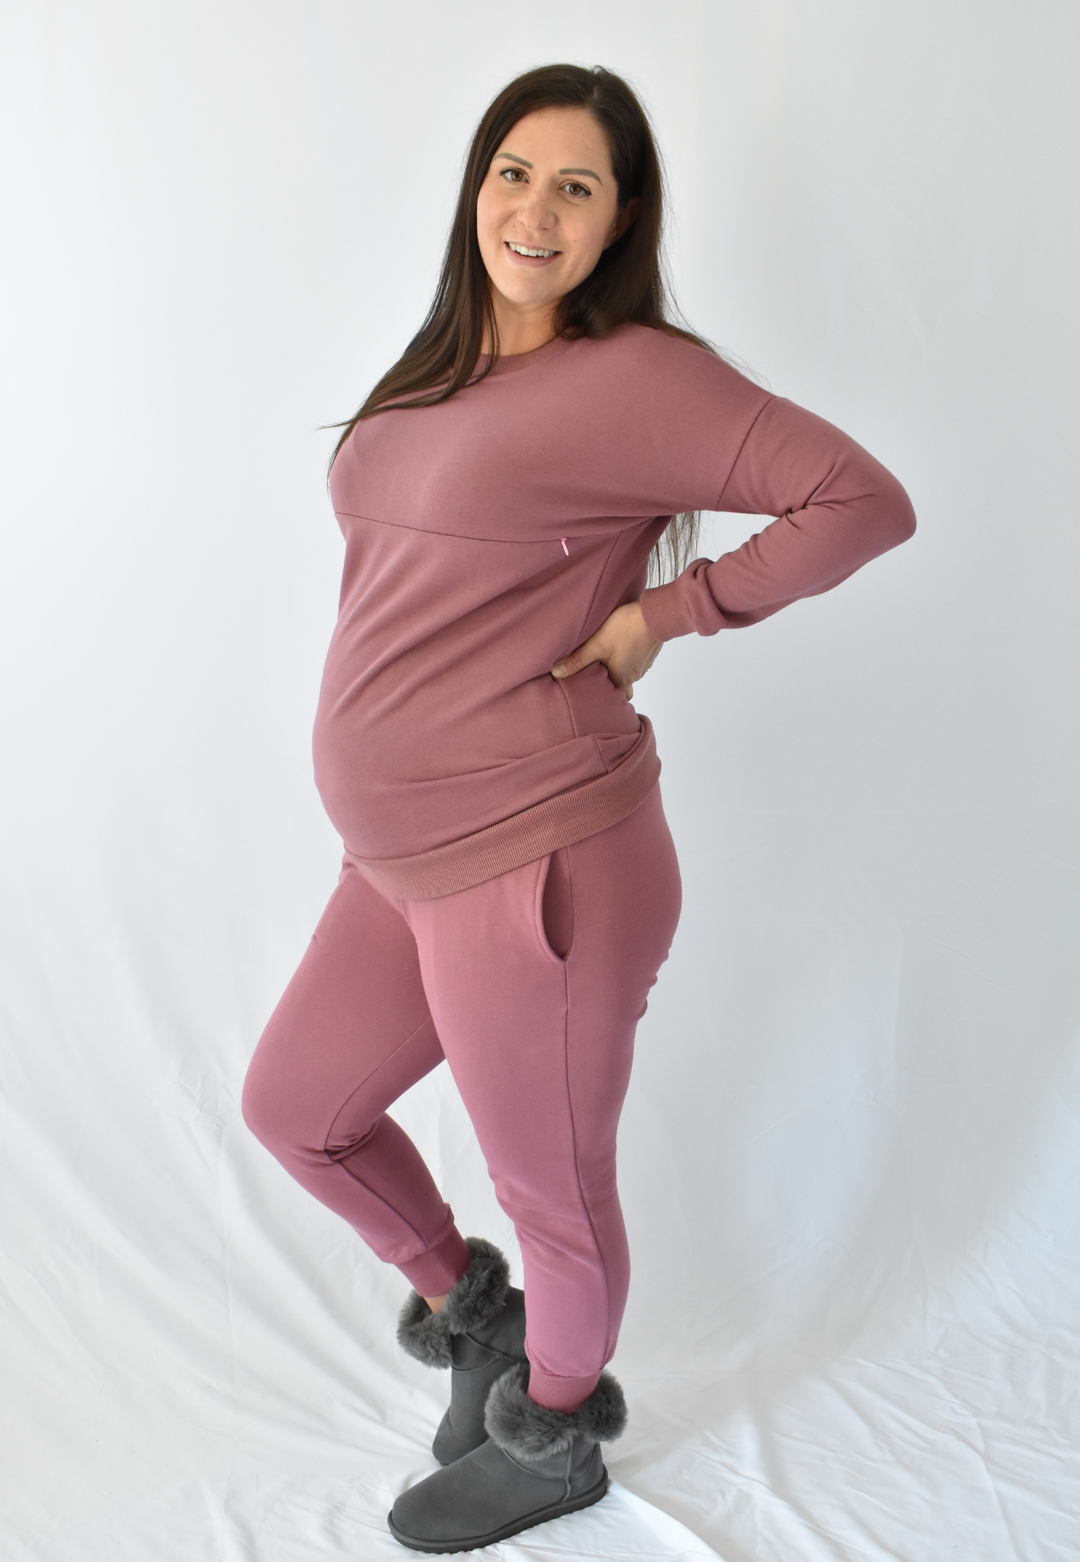 Maternity jeans Canada. Maternity denim Canada. Maternity pants. Pregnancy jeans. Pregnancy denim. Pregnancy leggings. Maternity leggings.